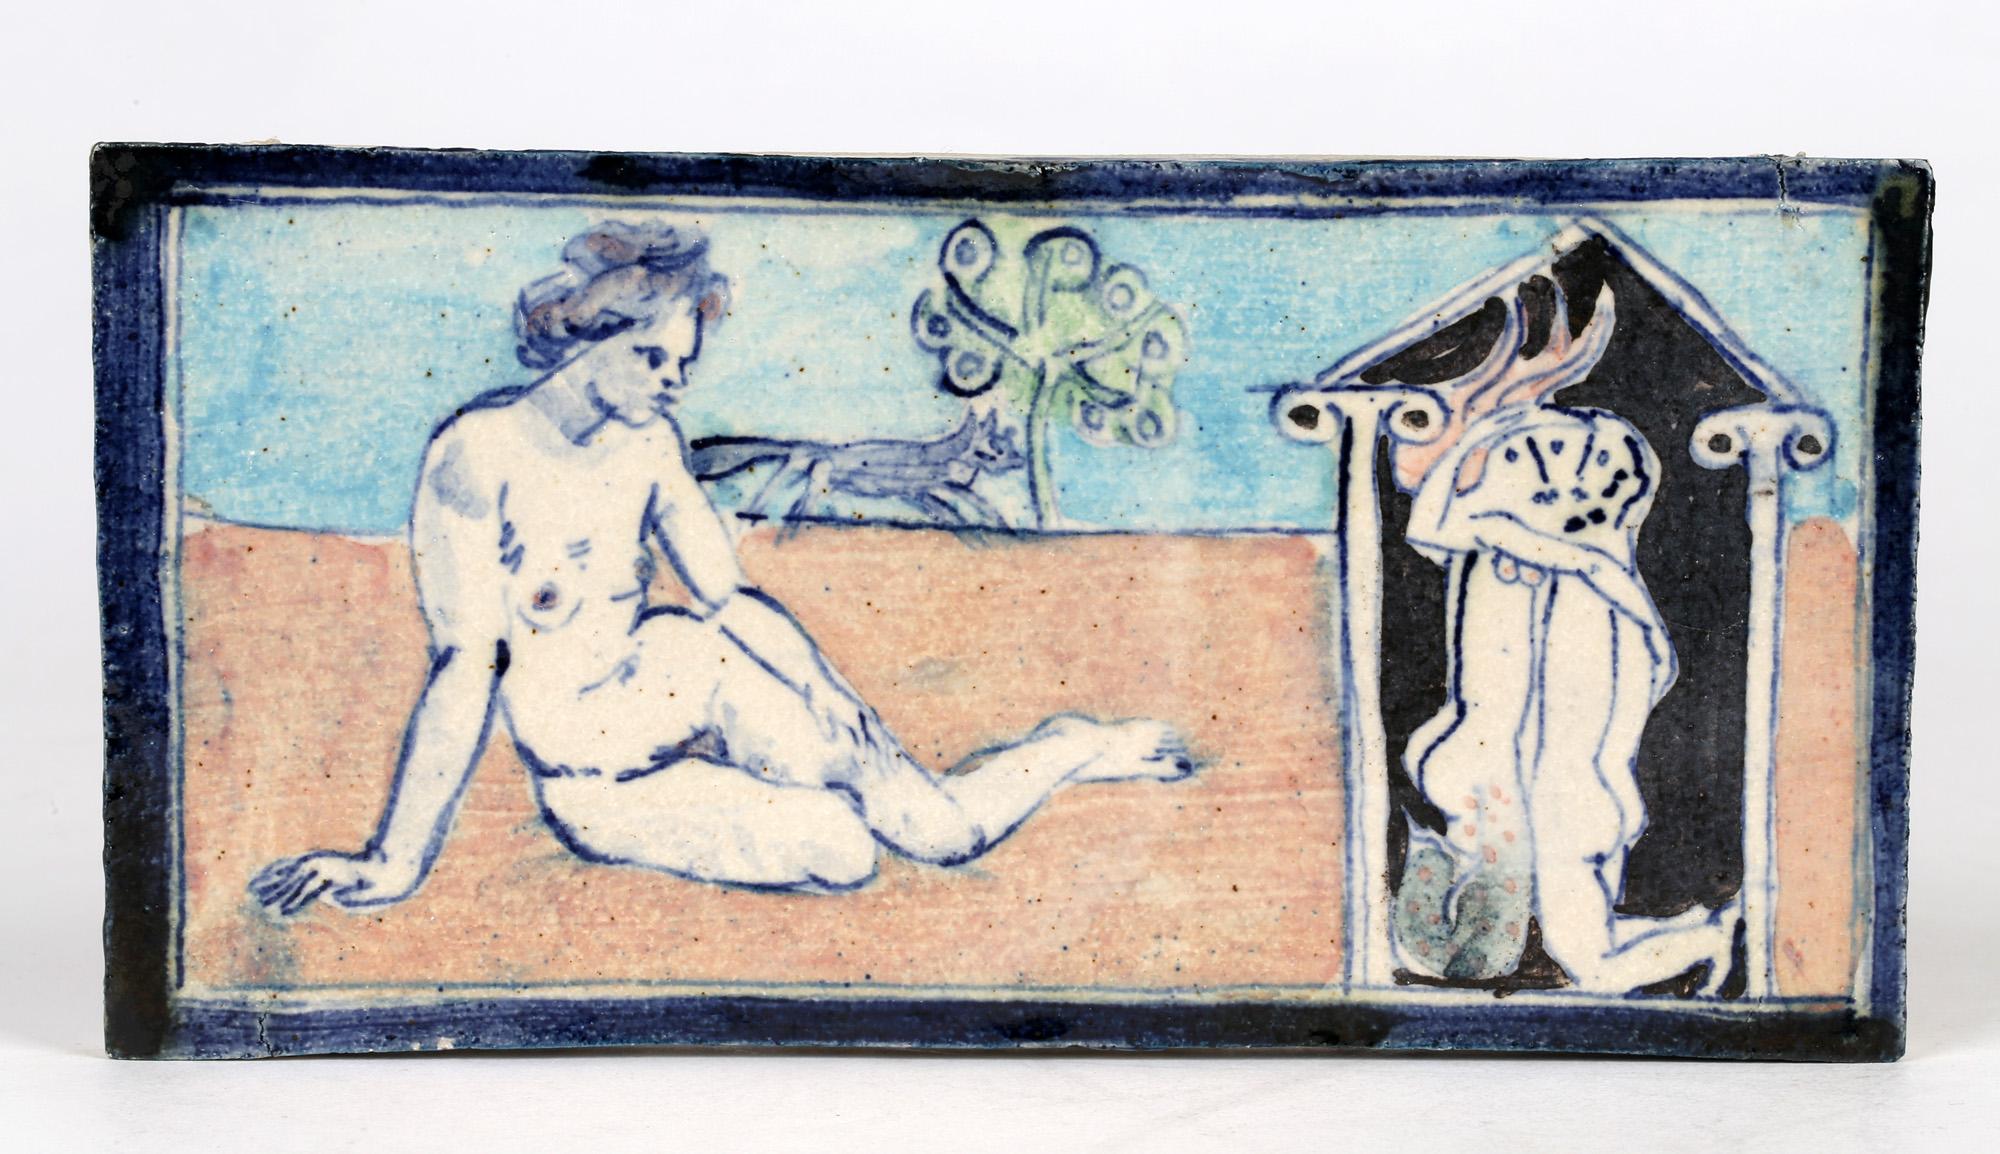 Hand-Painted Eric James Mellon Unique Studio Pottery Tile with Nudes Titled Mermaid